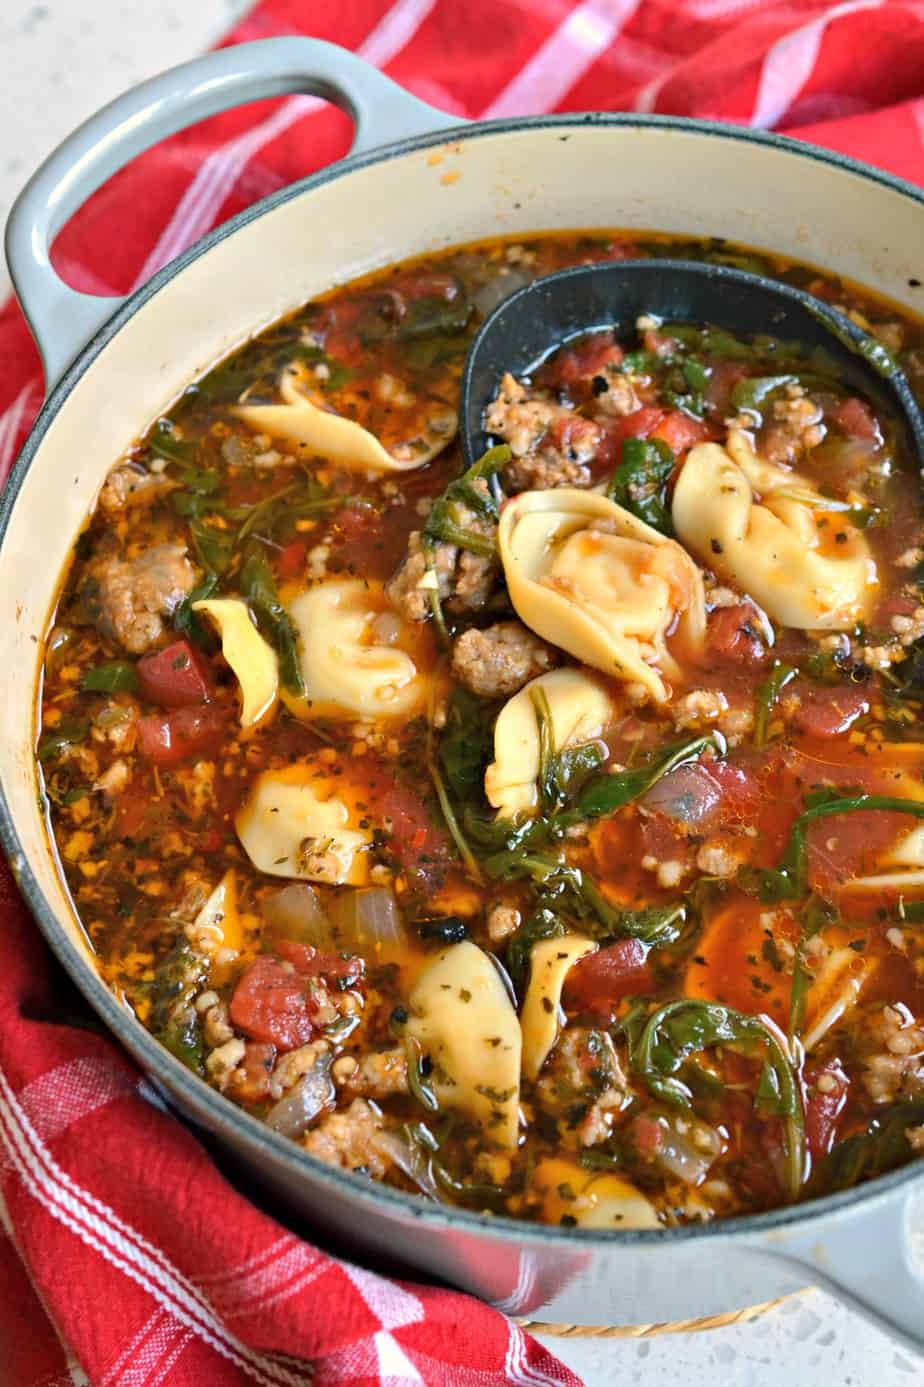 Tortellini Soup with Sweet Italian Sausage and Arugula